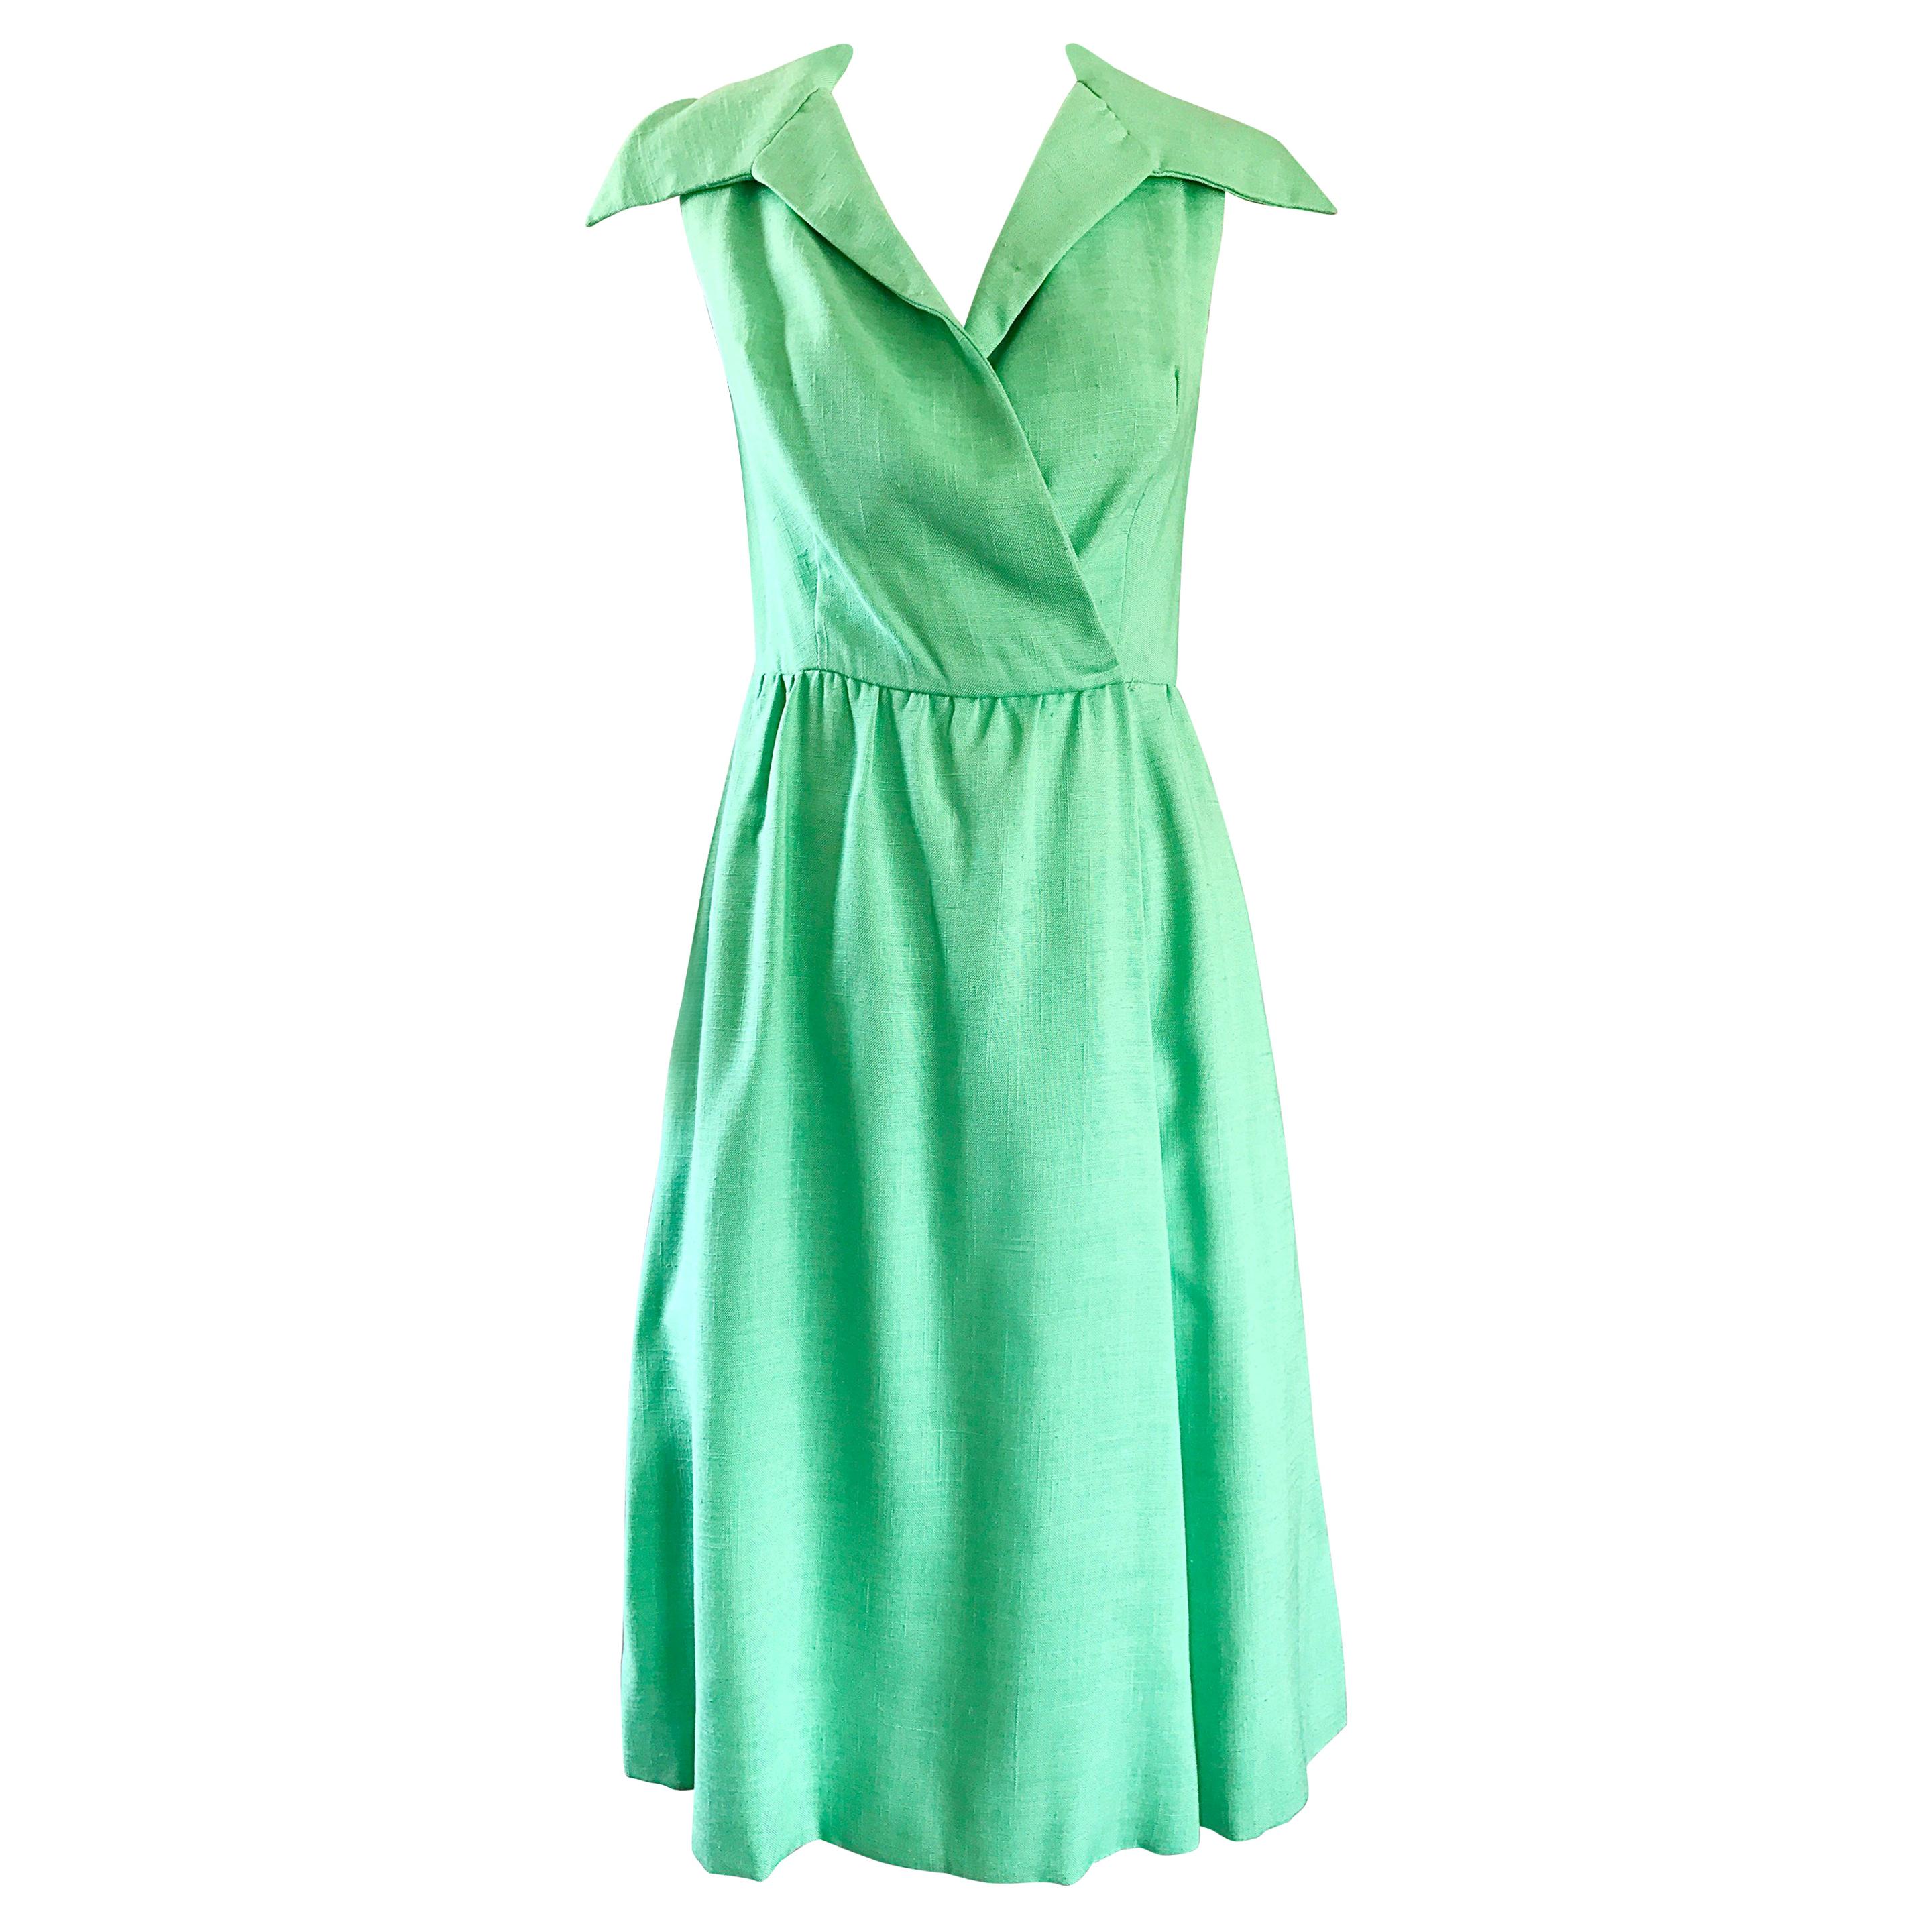 1950s Mollie Parnis Sorbet Light Green Linen Mint Vintage 50s Shirt Dress